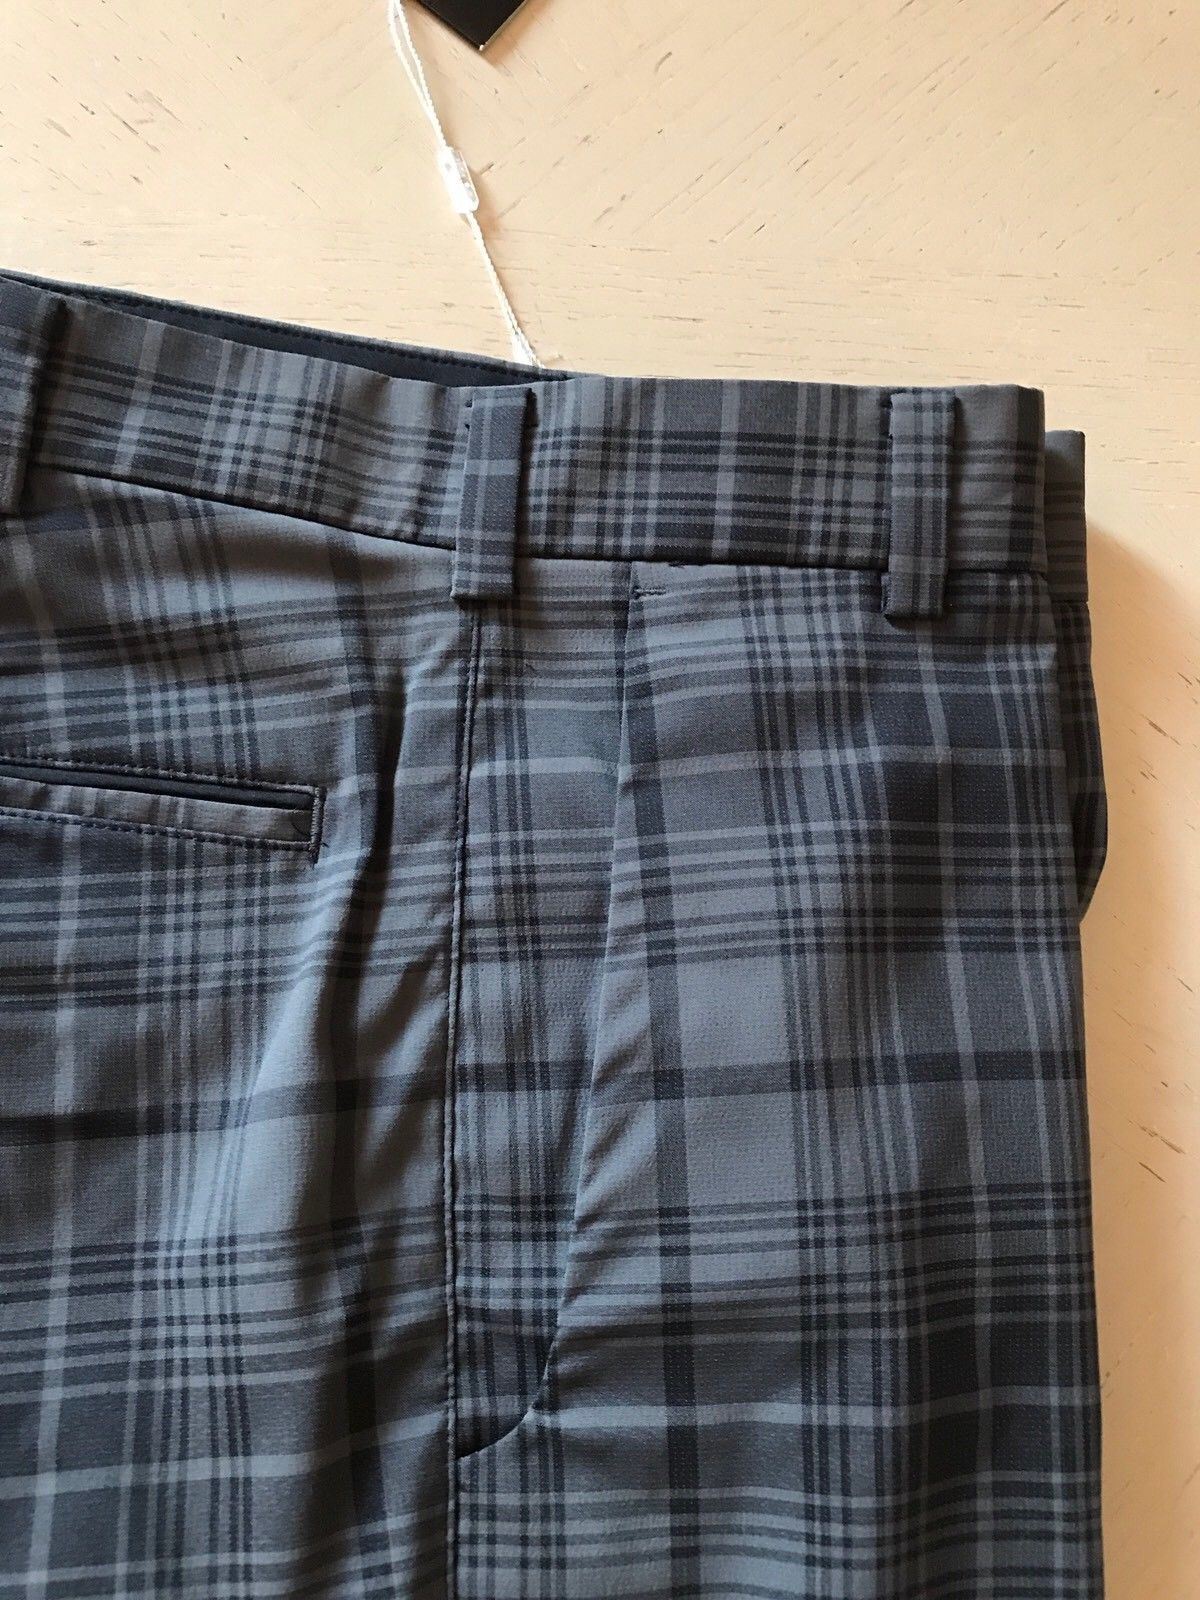 New $70 Nike Golf Short Pants DK Gray Size 28 - BAYSUPERSTORE